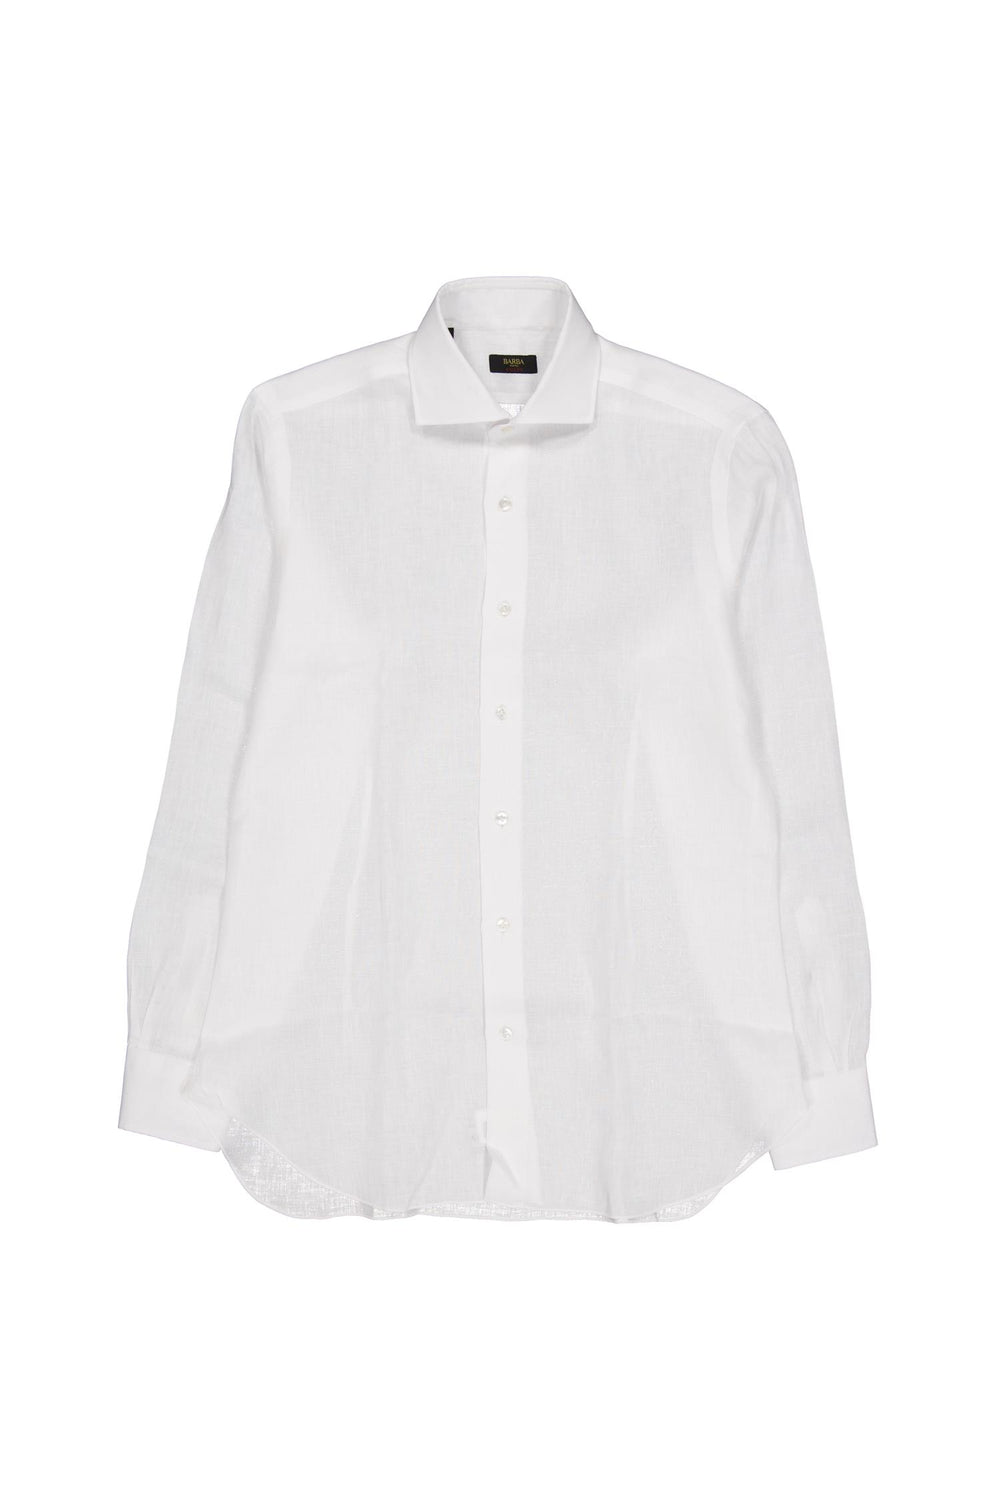 Culto White Linen Shirt-Barba Napoli-Bogartstore